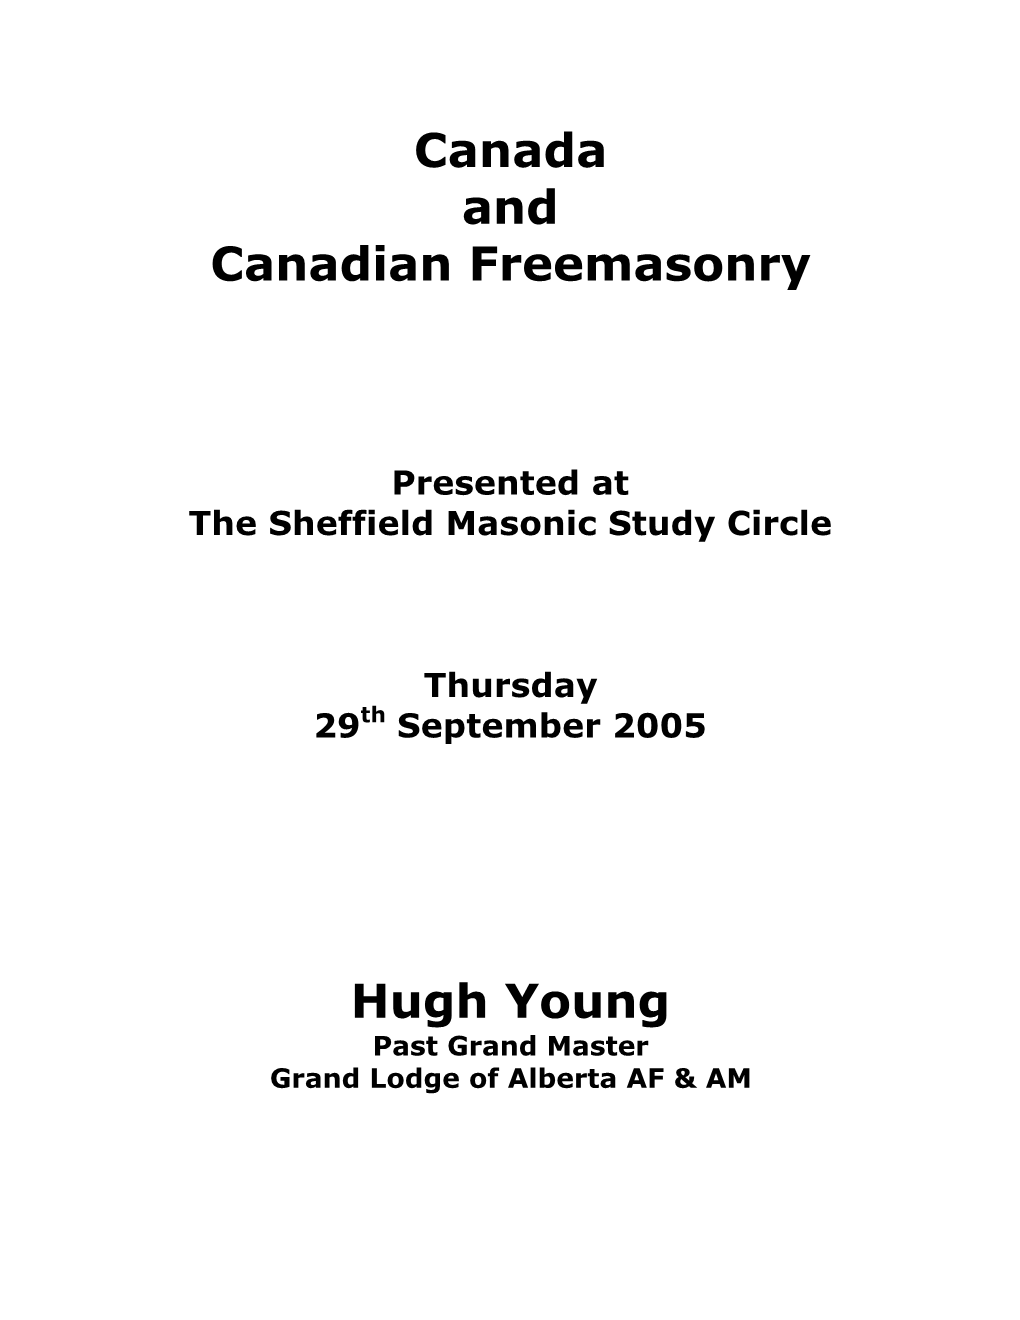 Canada and Canadian Freemasonry by MW Bro. Hugh Young